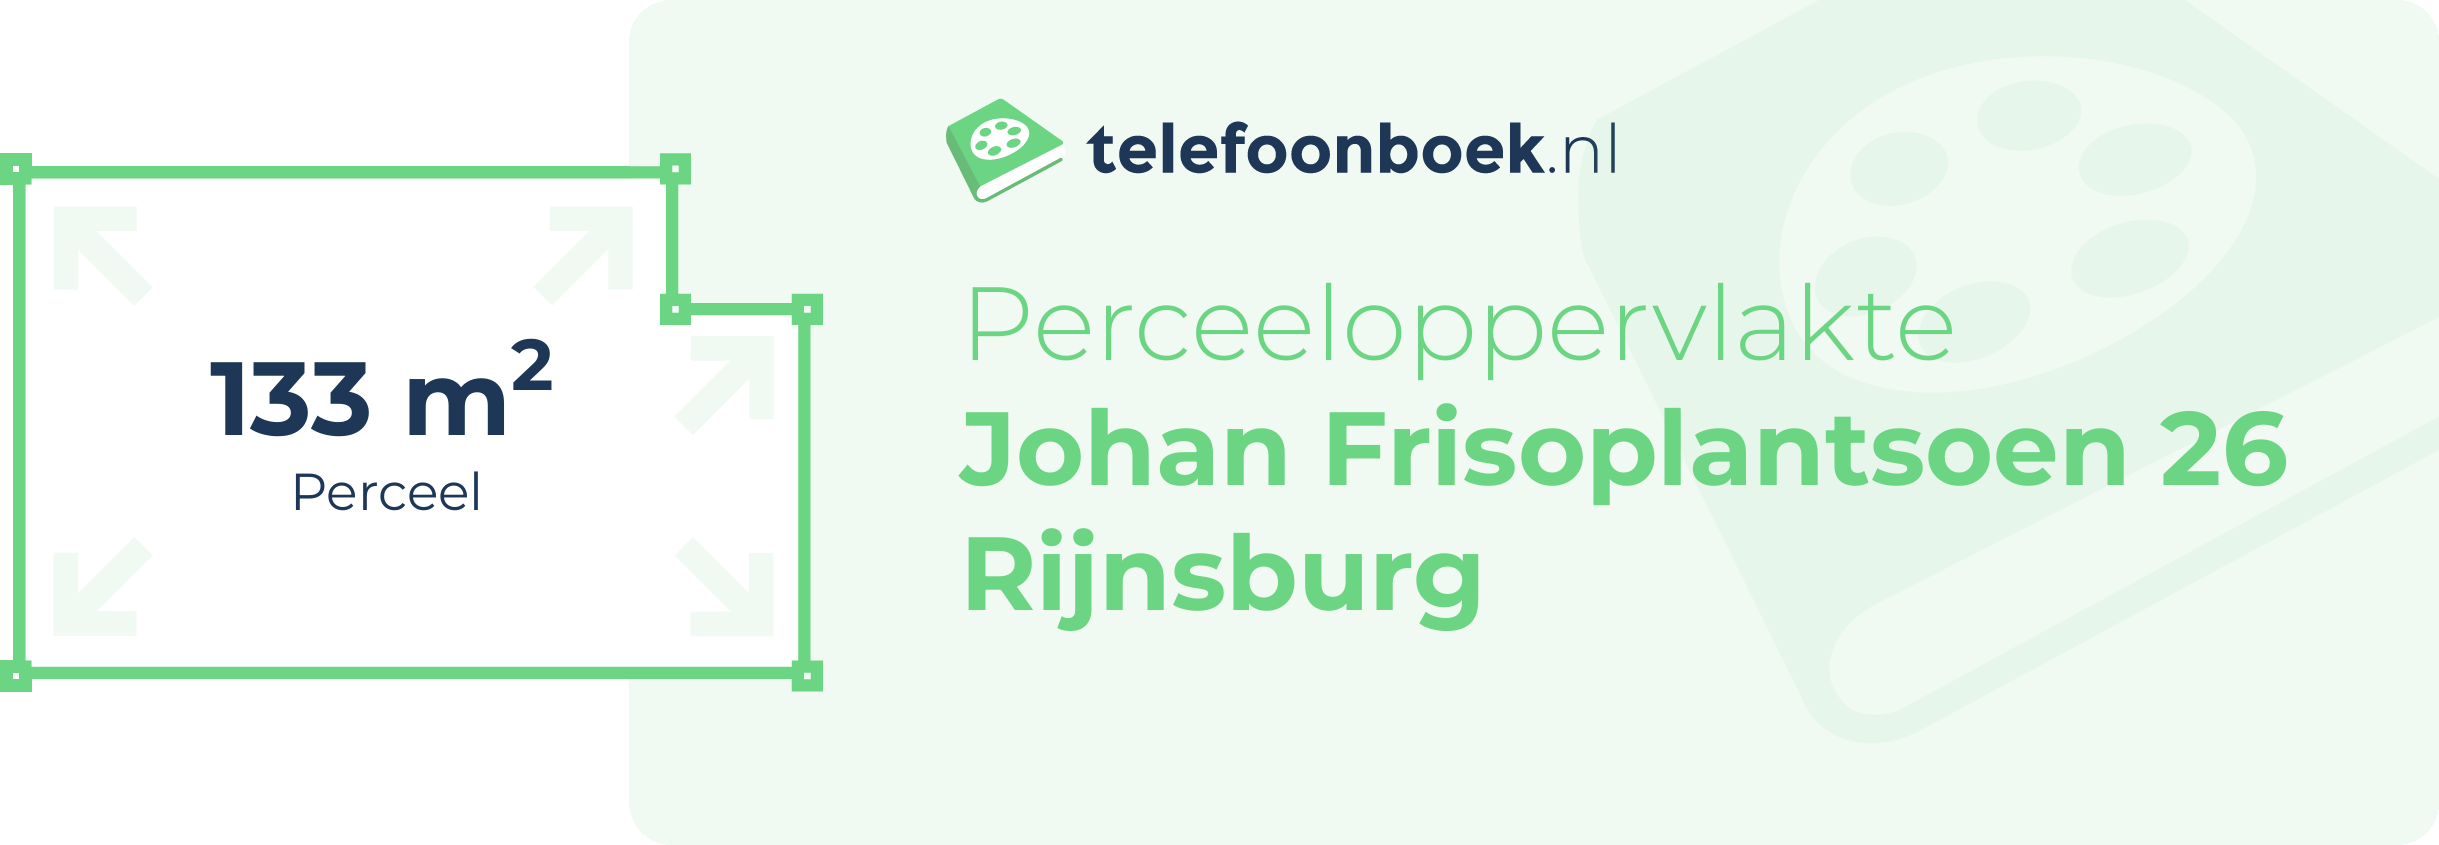 Perceeloppervlakte Johan Frisoplantsoen 26 Rijnsburg